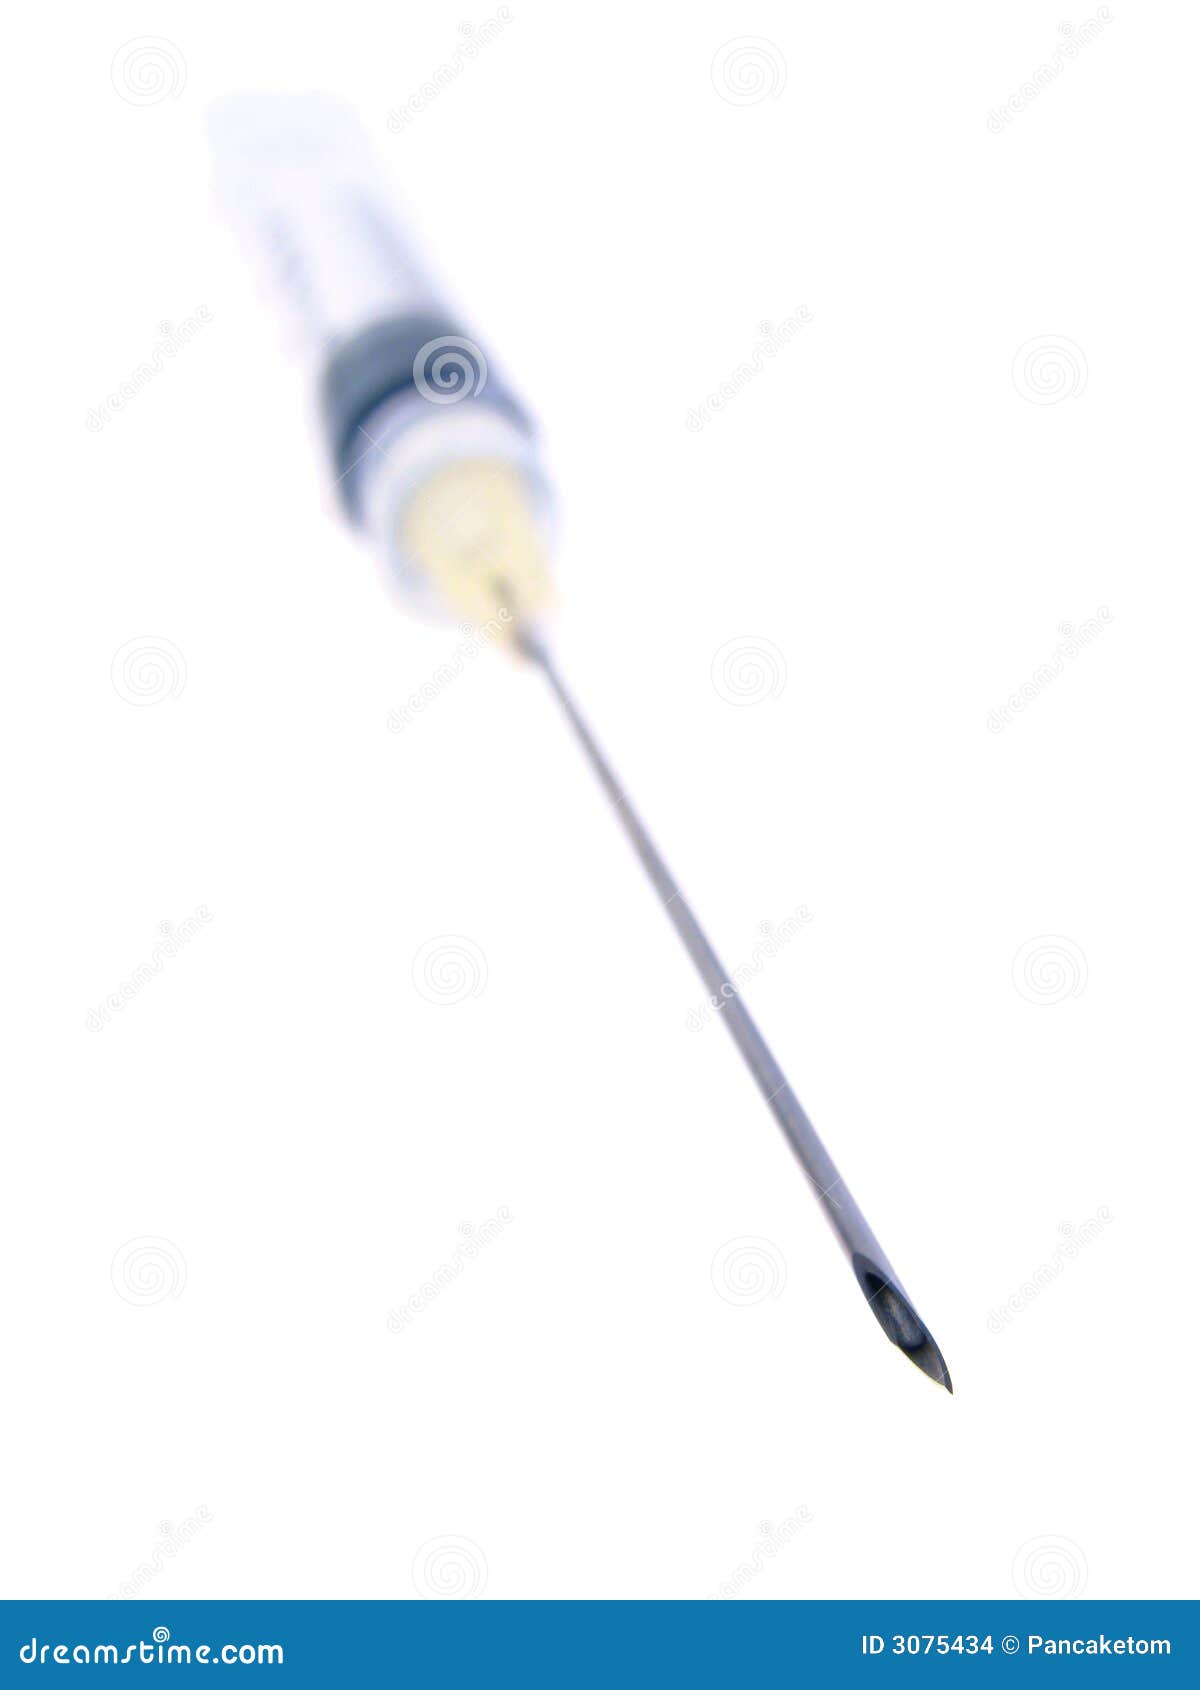 hypodermic needle point